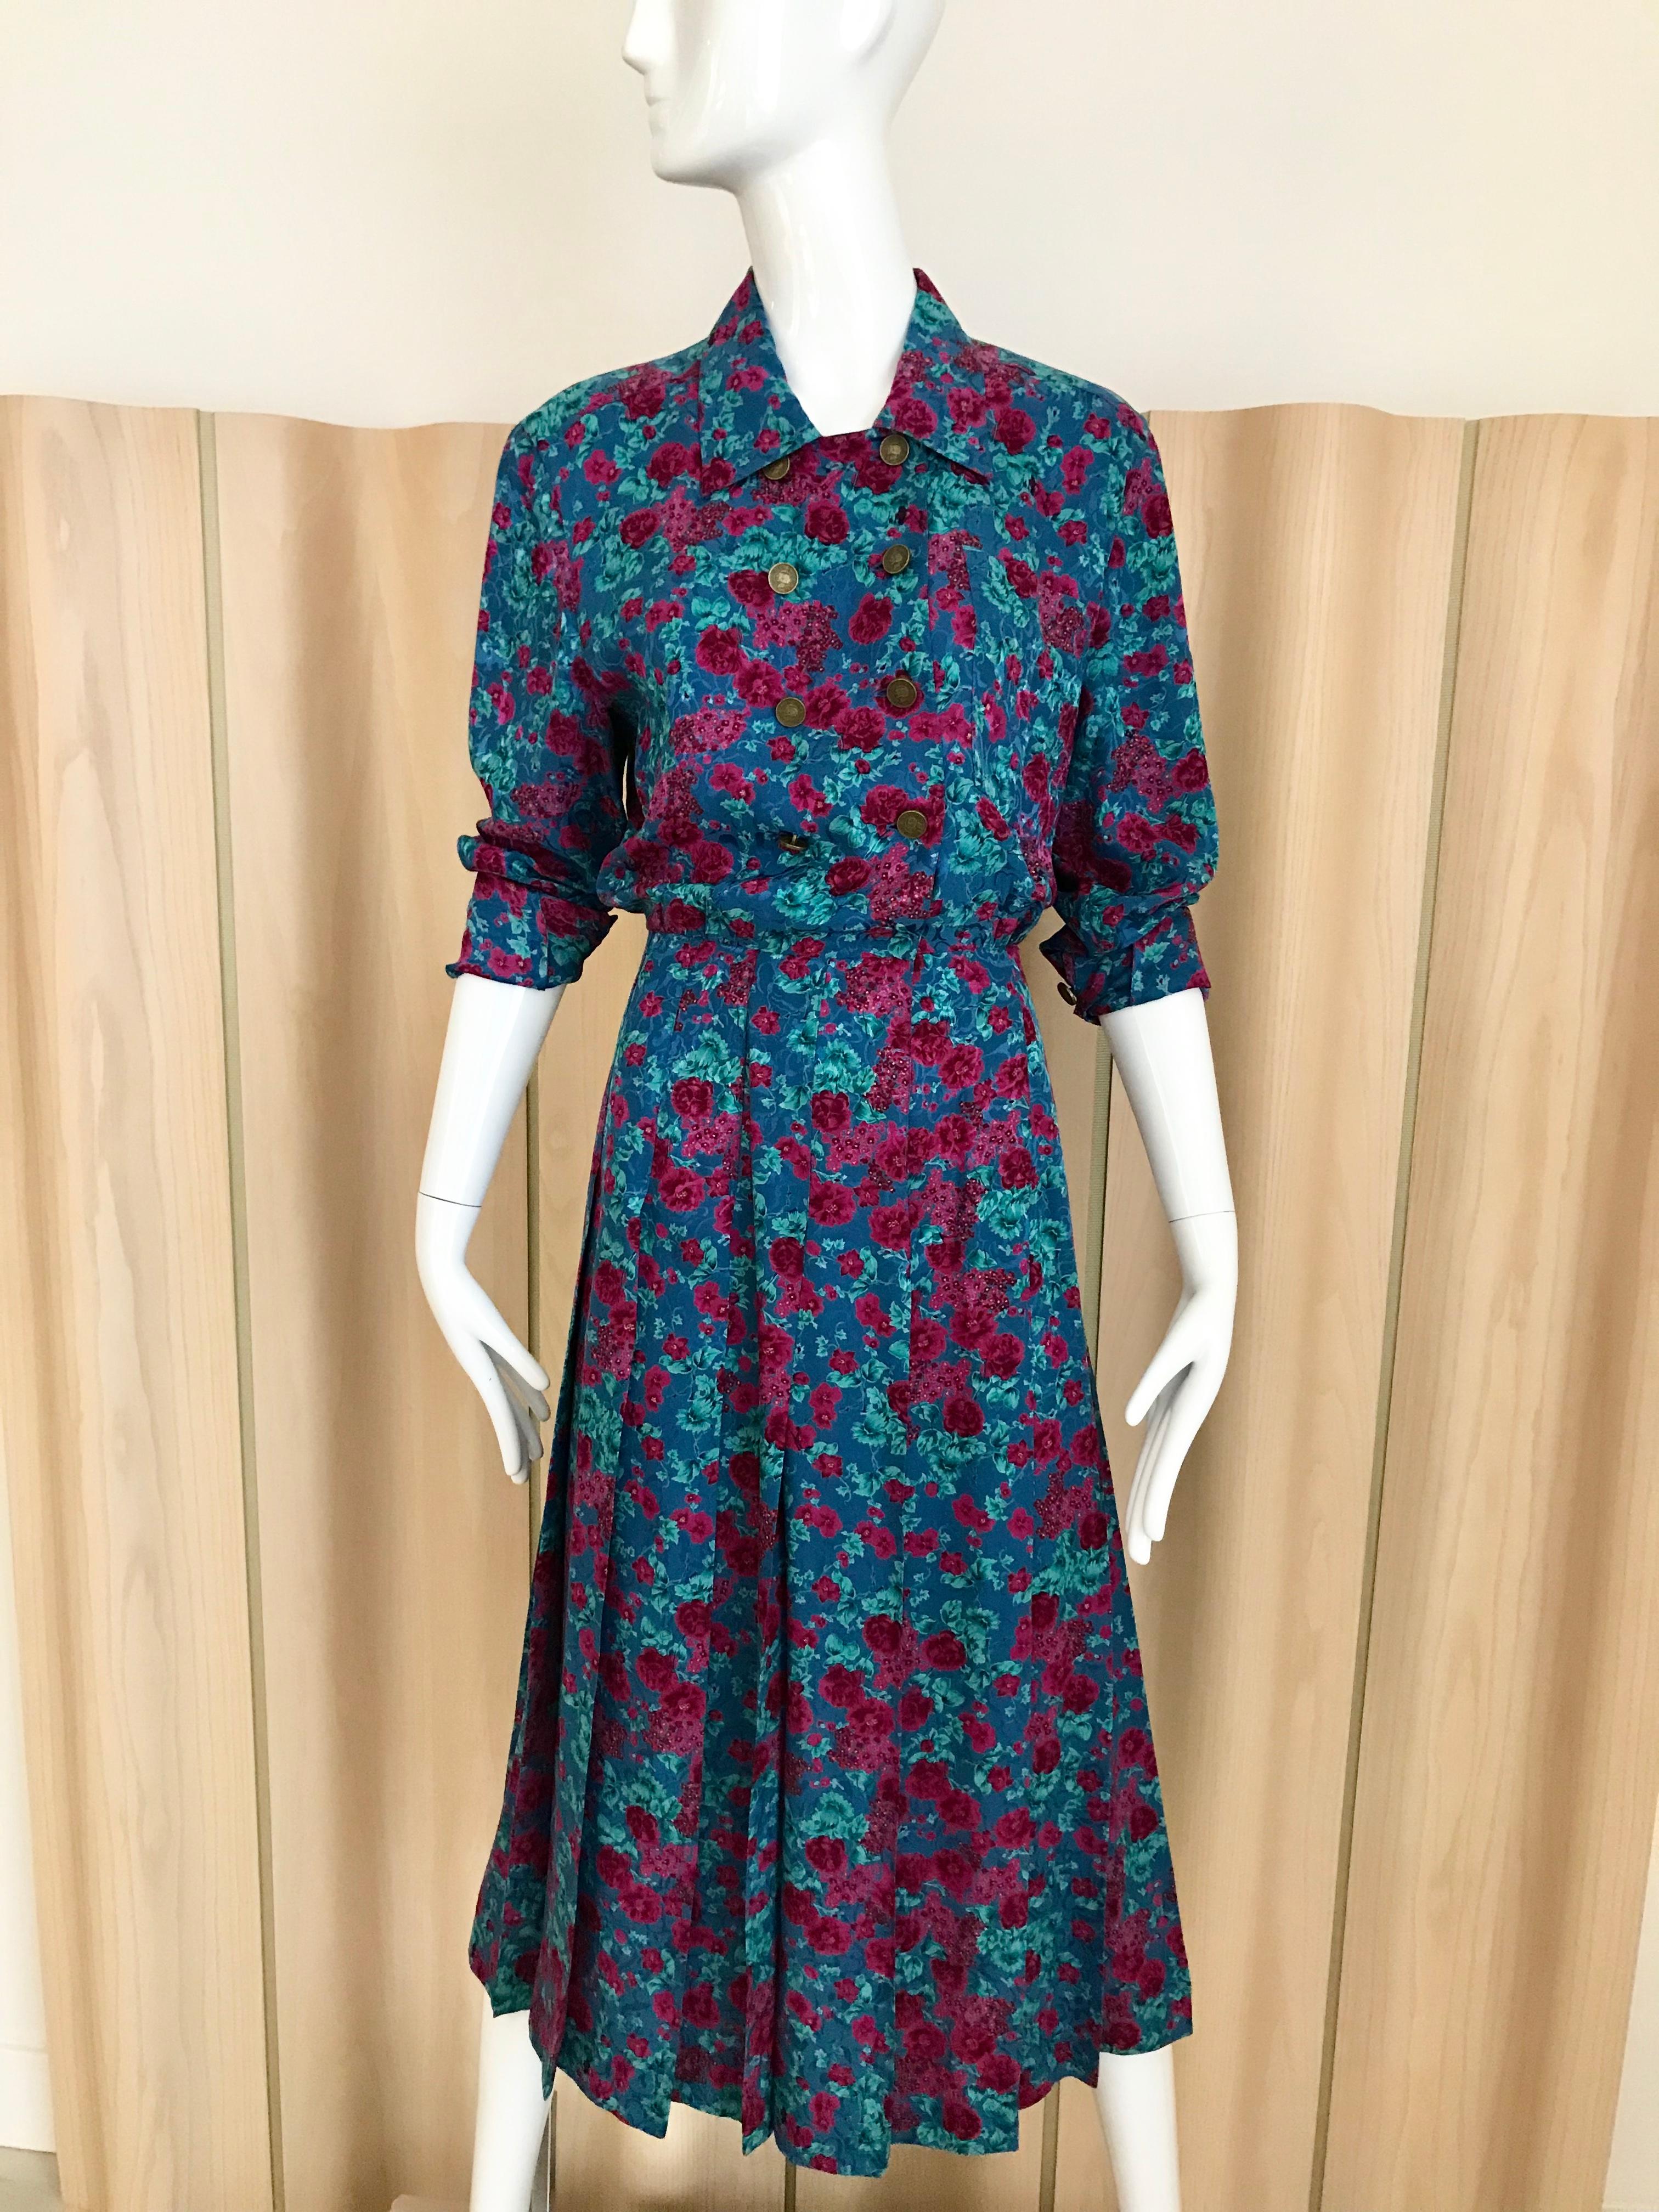 Vintage 1970s Chanel silk long sleeve dress in teal, red, hot pink floral print shirt dress.
Size medium / see measurement:
Bust: 39” / Waist : 29”/ Hip : 42”/ length : 48”/ sleeve: 24”